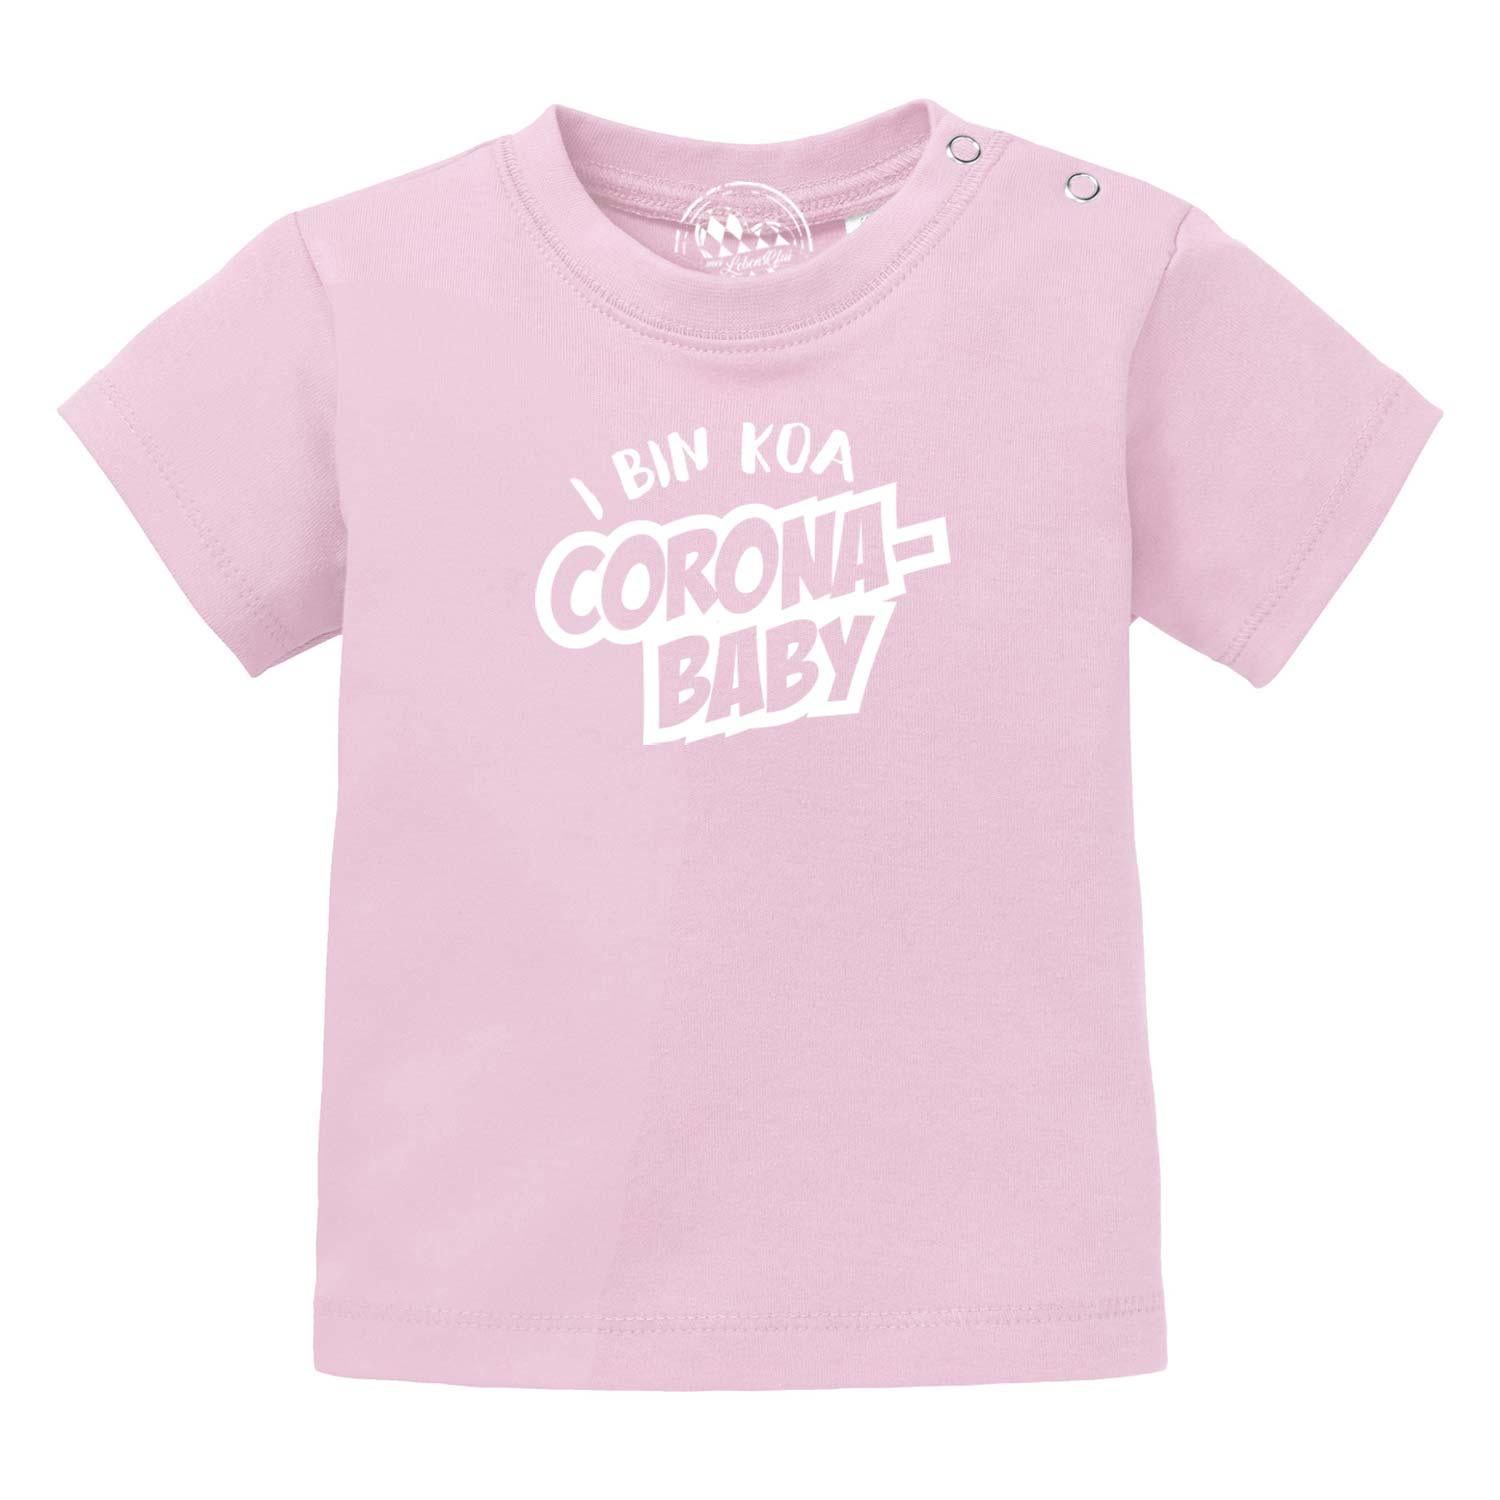 Baby T-Shirt "koa Coronababy" - bavariashop - mei LebensGfui